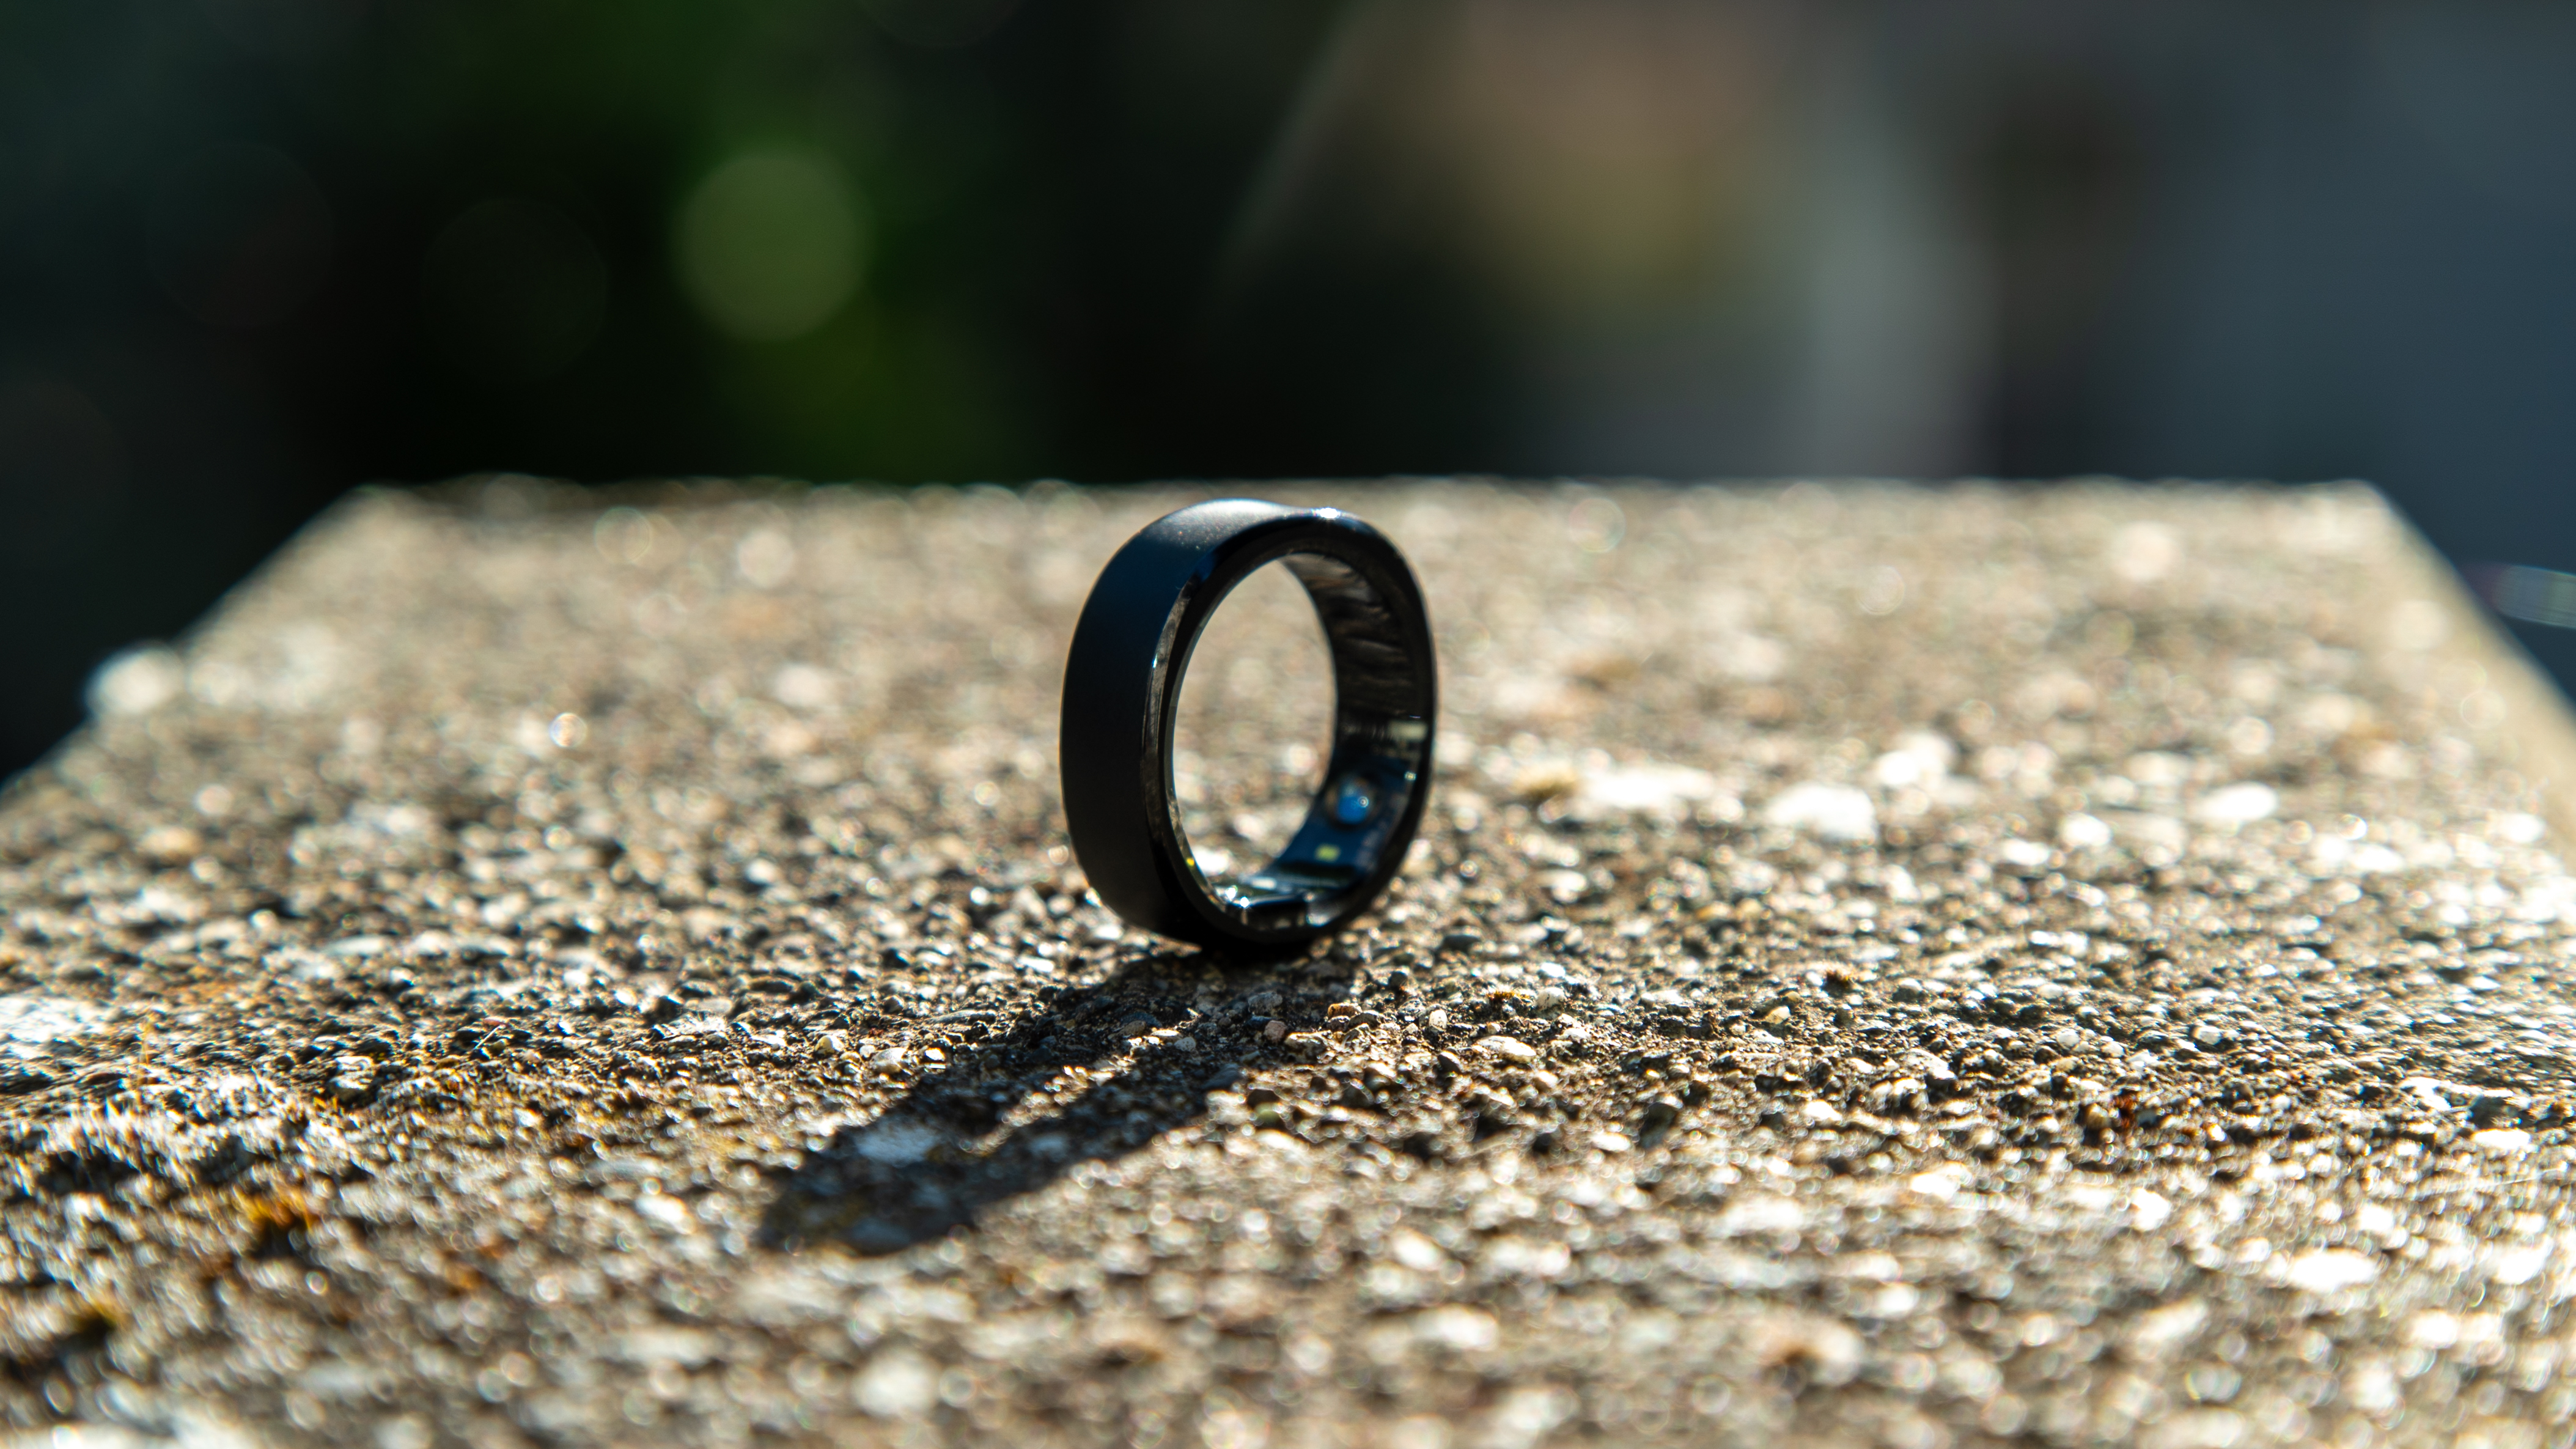 The RingConn Smart Ring